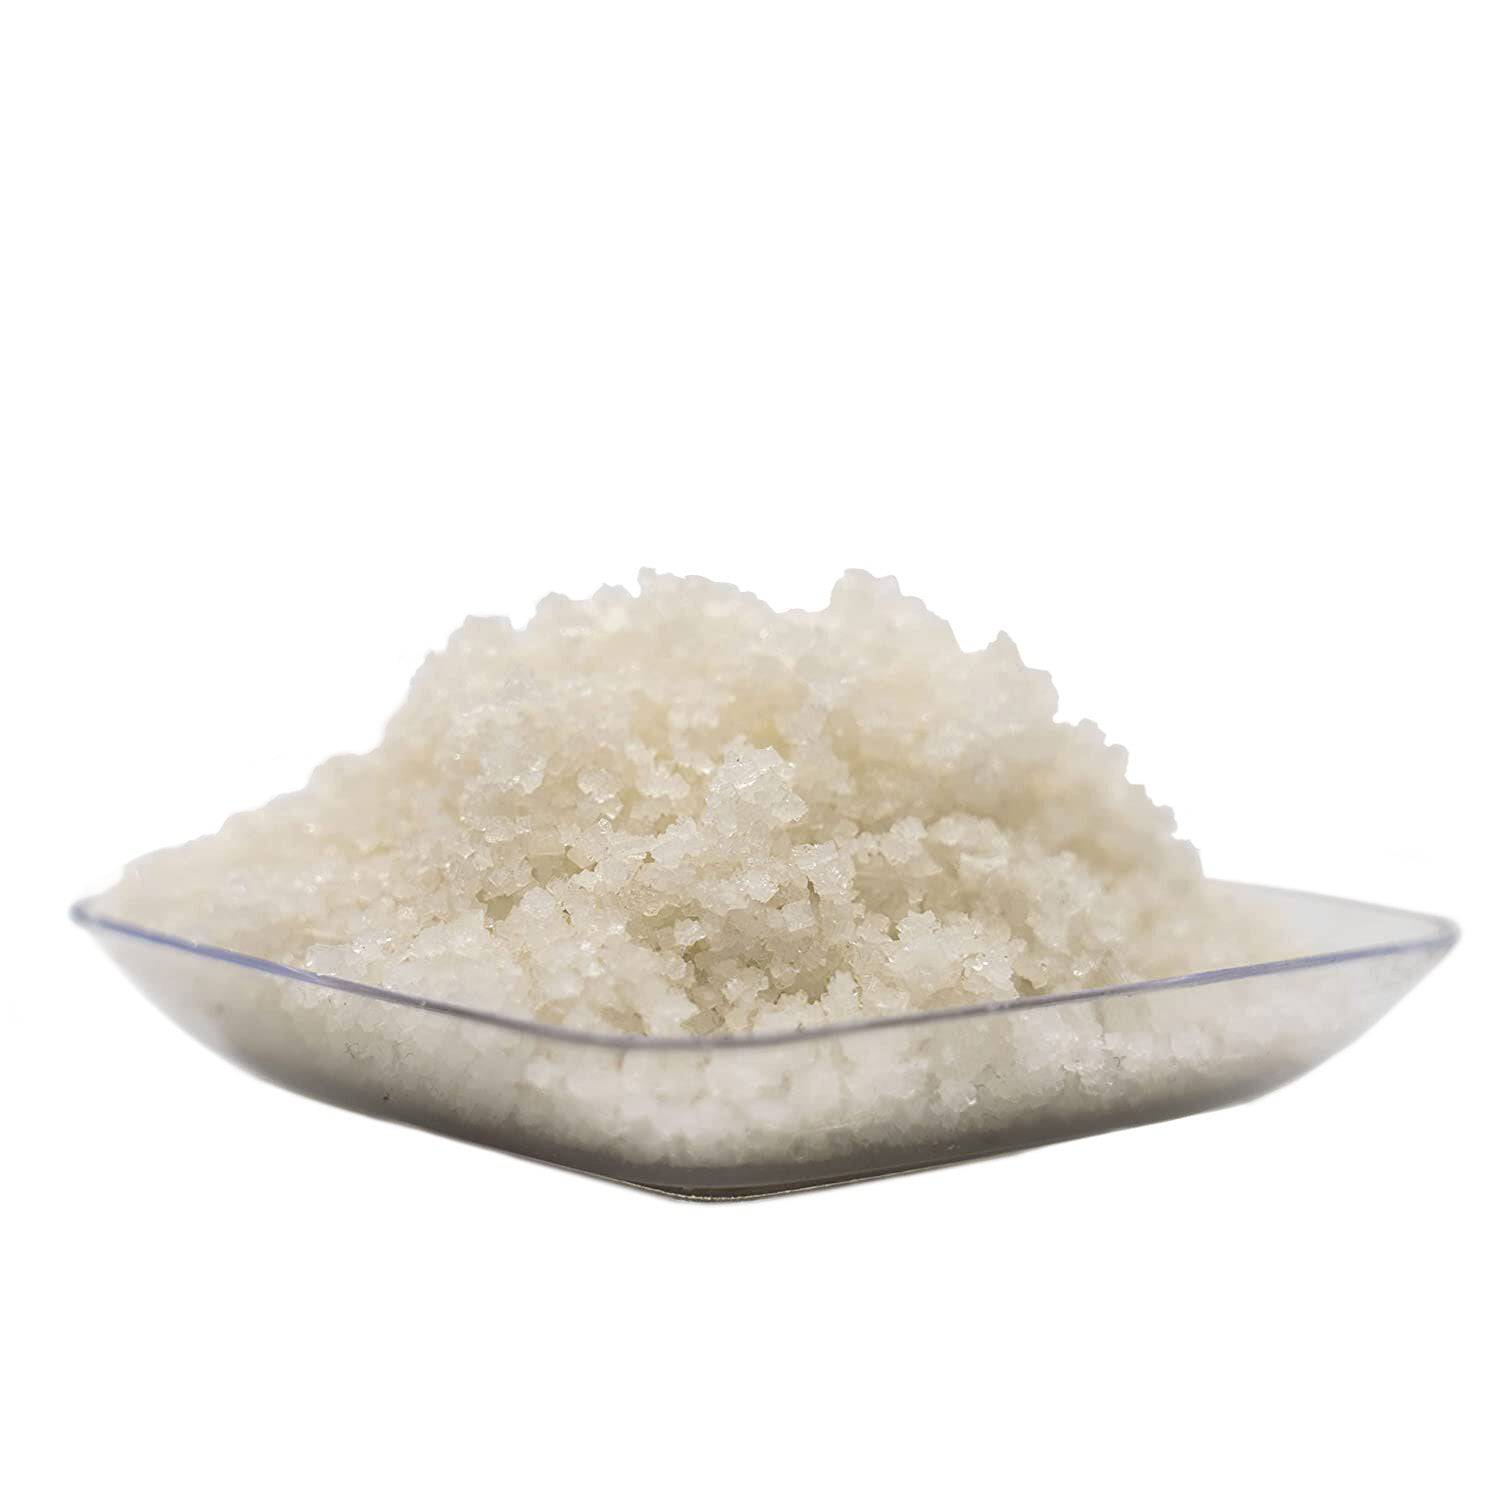 Guerande 'Fleur De Sel' Sea Salt, 4.4 Ounce (Pack of 2)